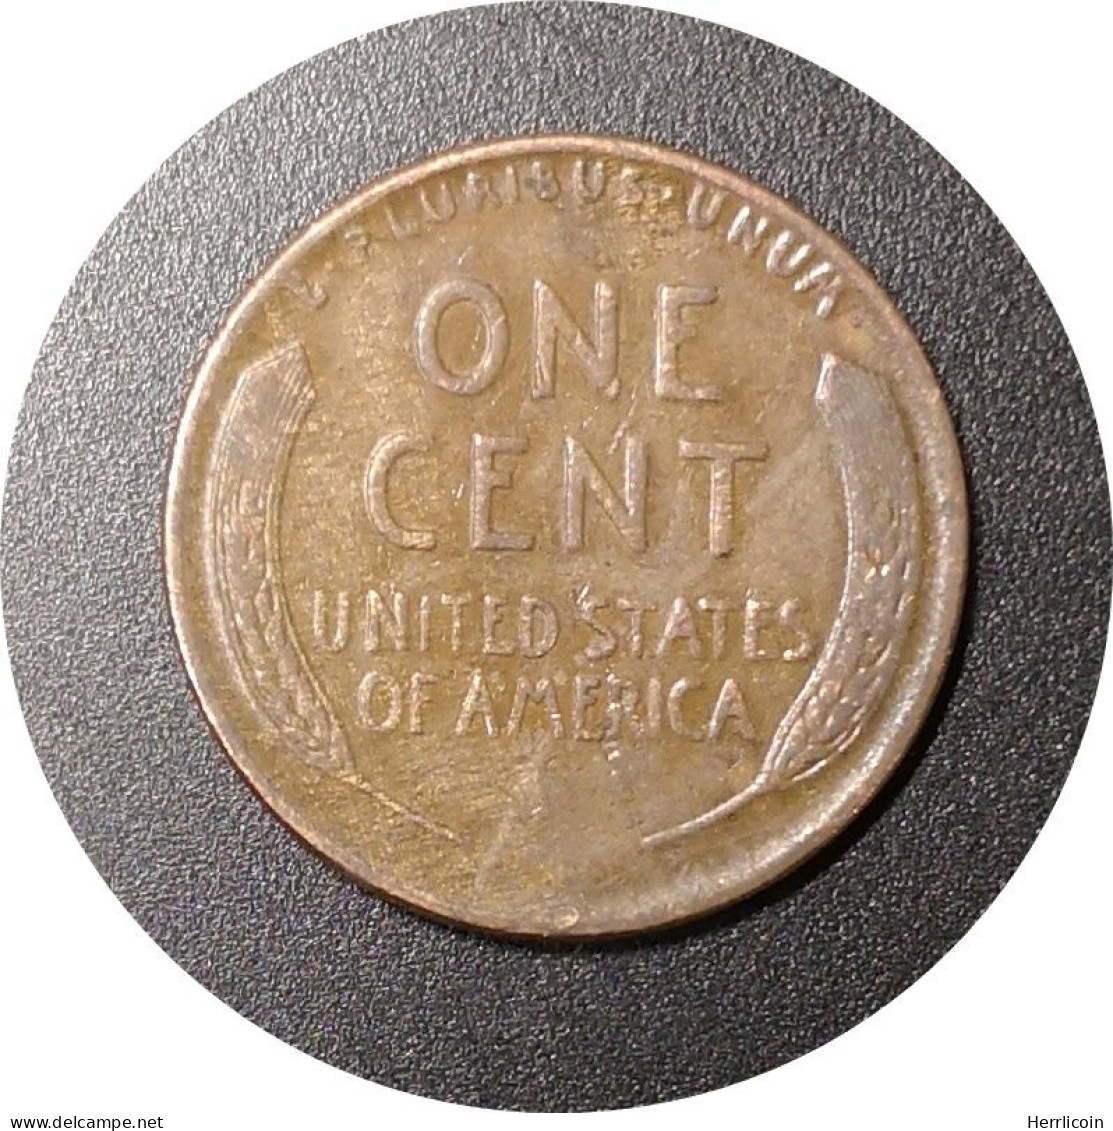 Monnaie Etats-Unis - 1941 -  1 Cent "Lincoln - Wheat Penny" - 1909-1958: Lincoln, Wheat Ears Reverse